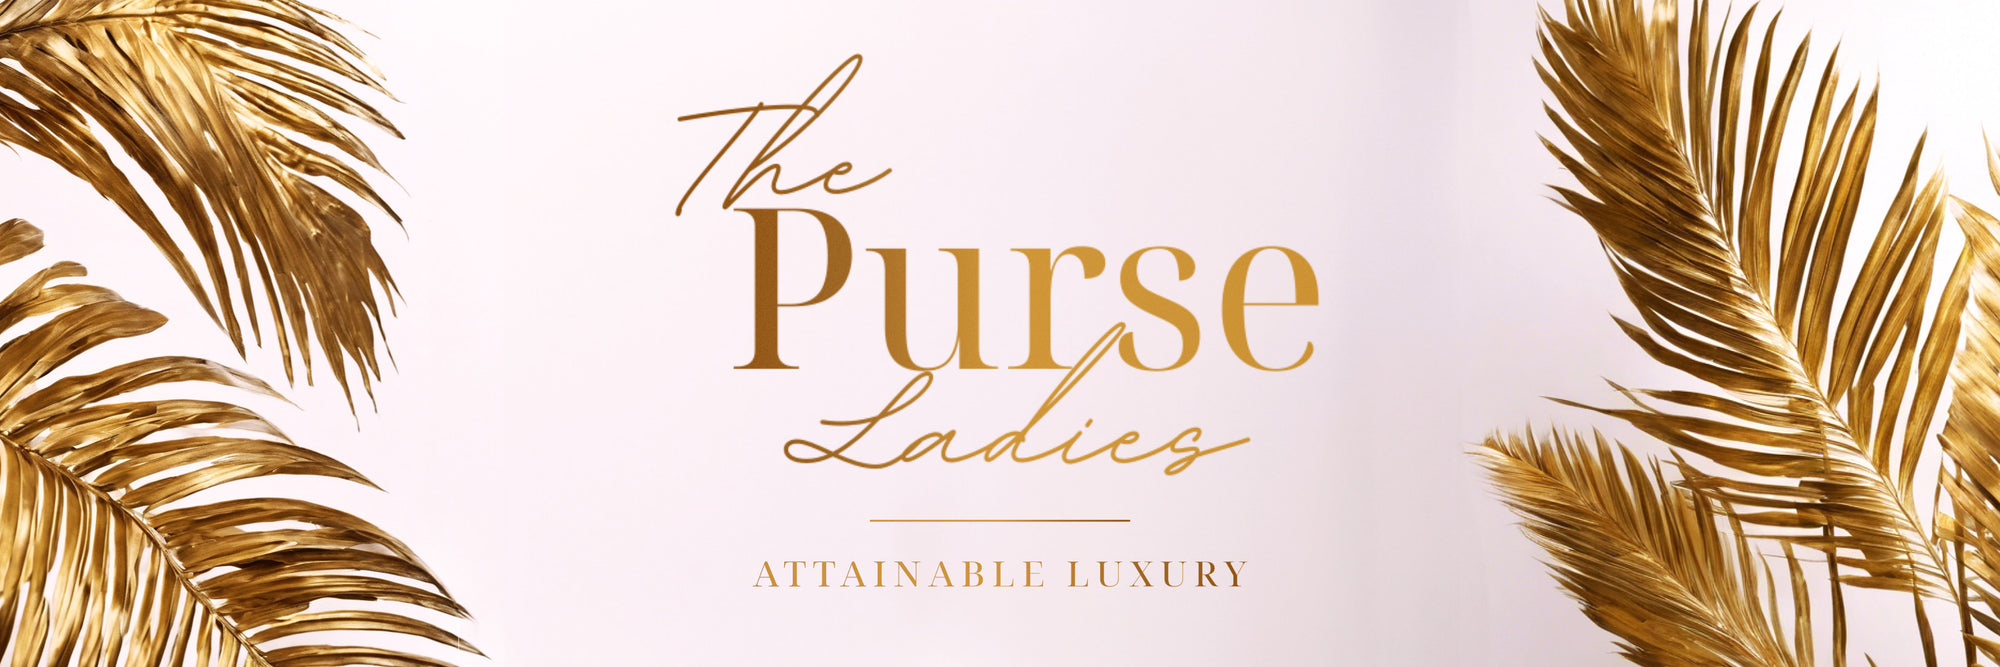 The Purse Ladies